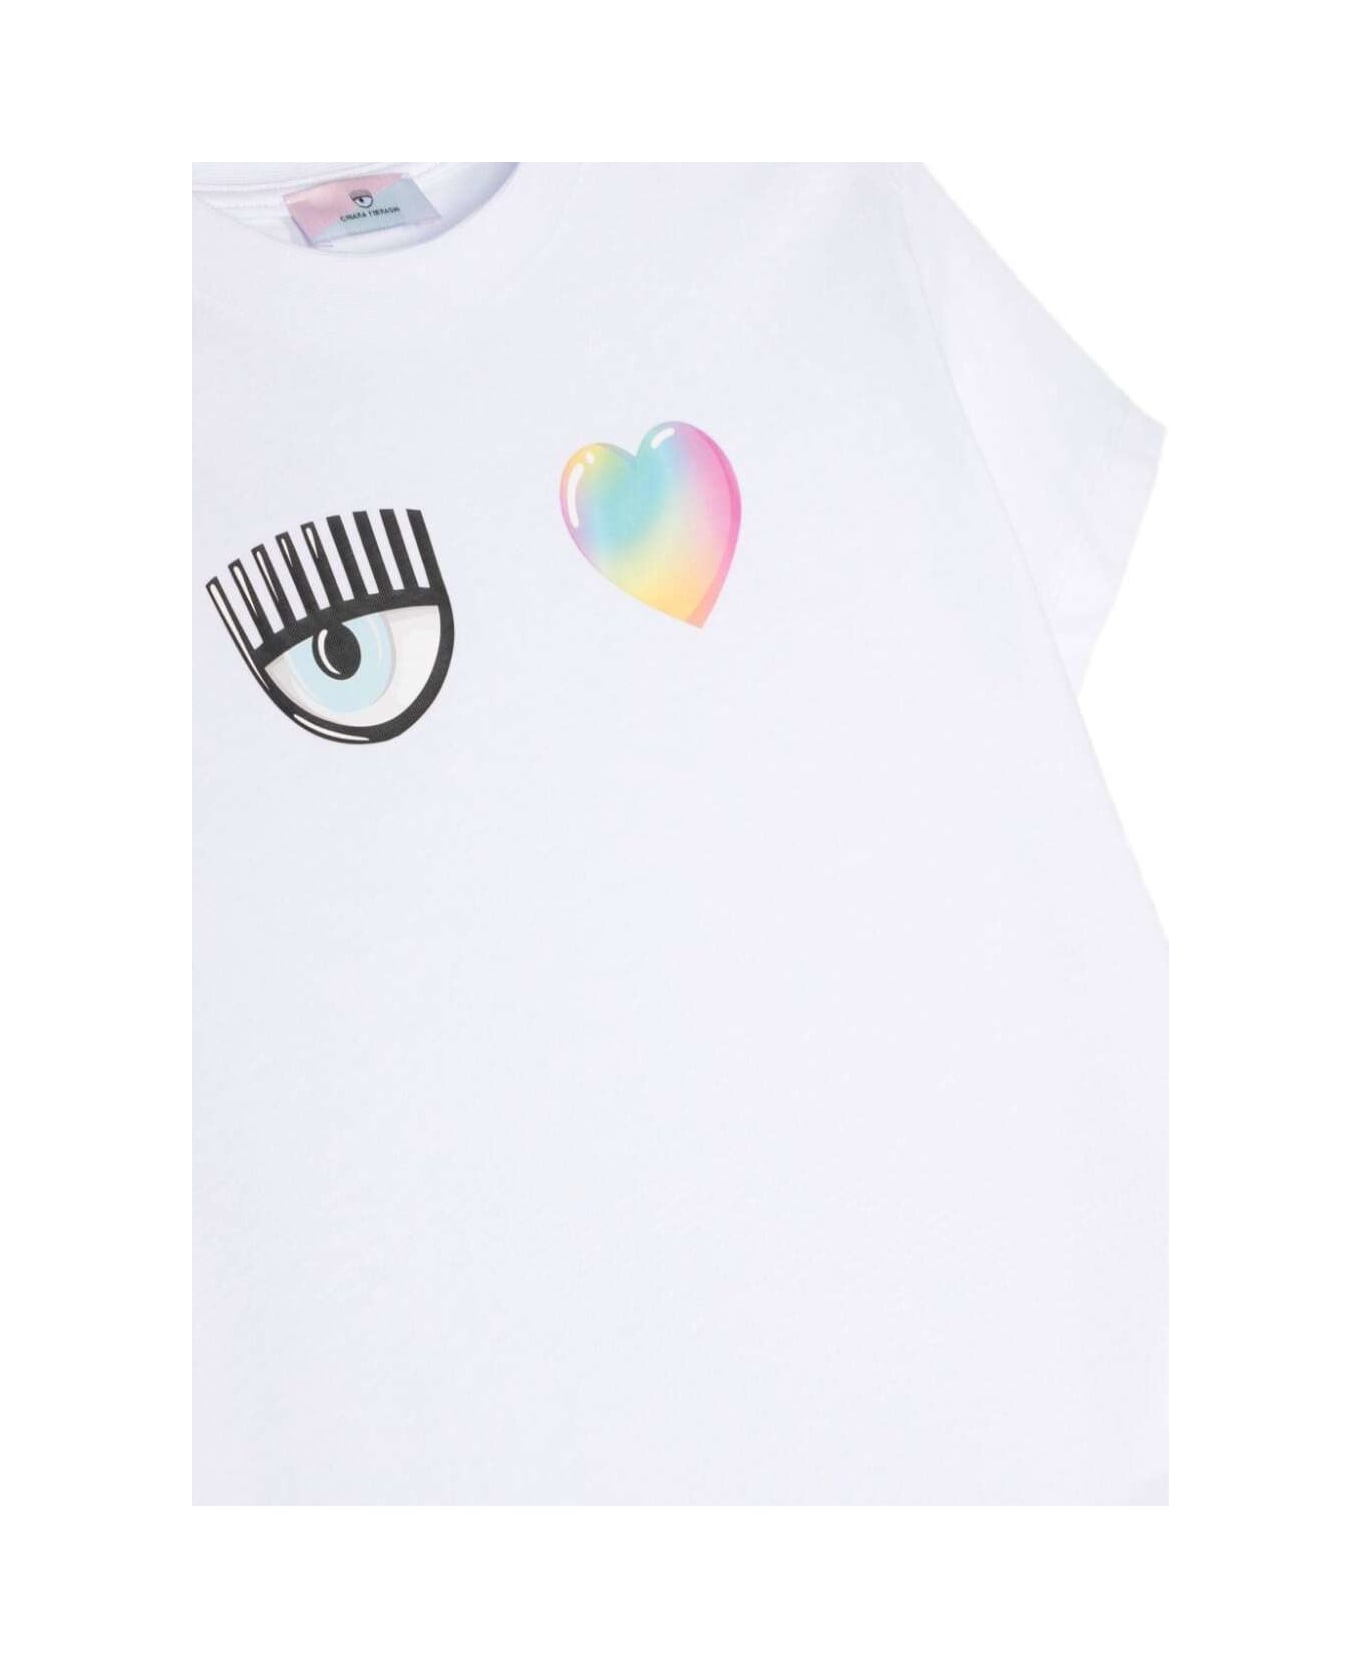 Chiara Ferragni White T-shirt With Logo Print In Cotton Girl - White